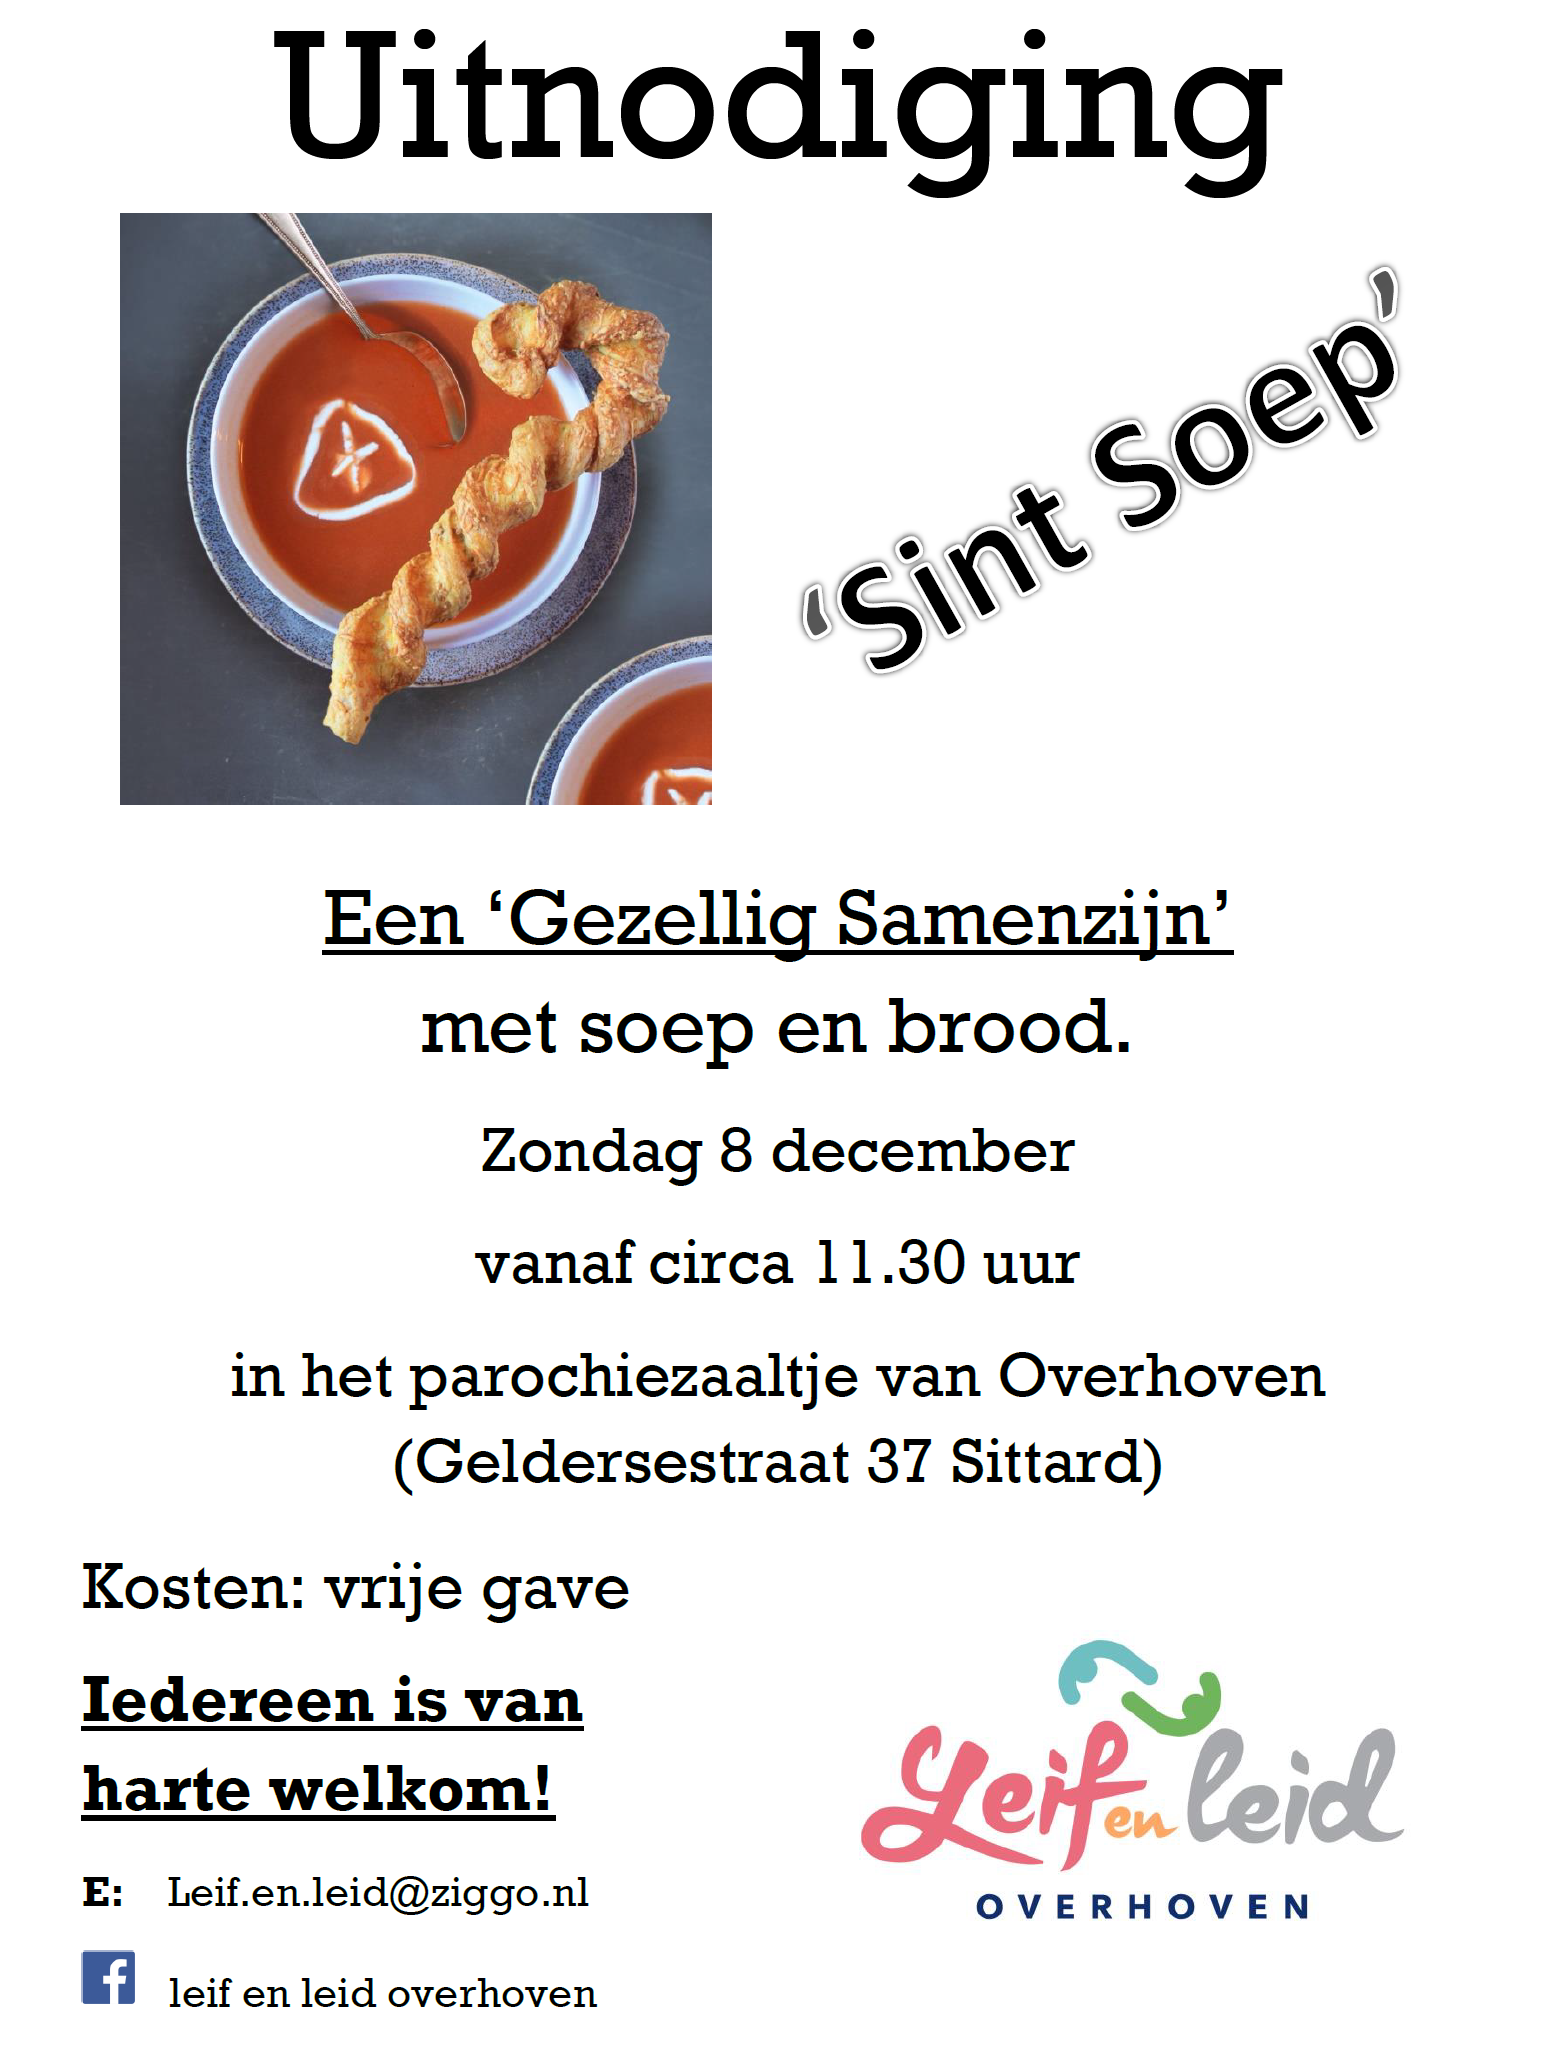 Sint Soep